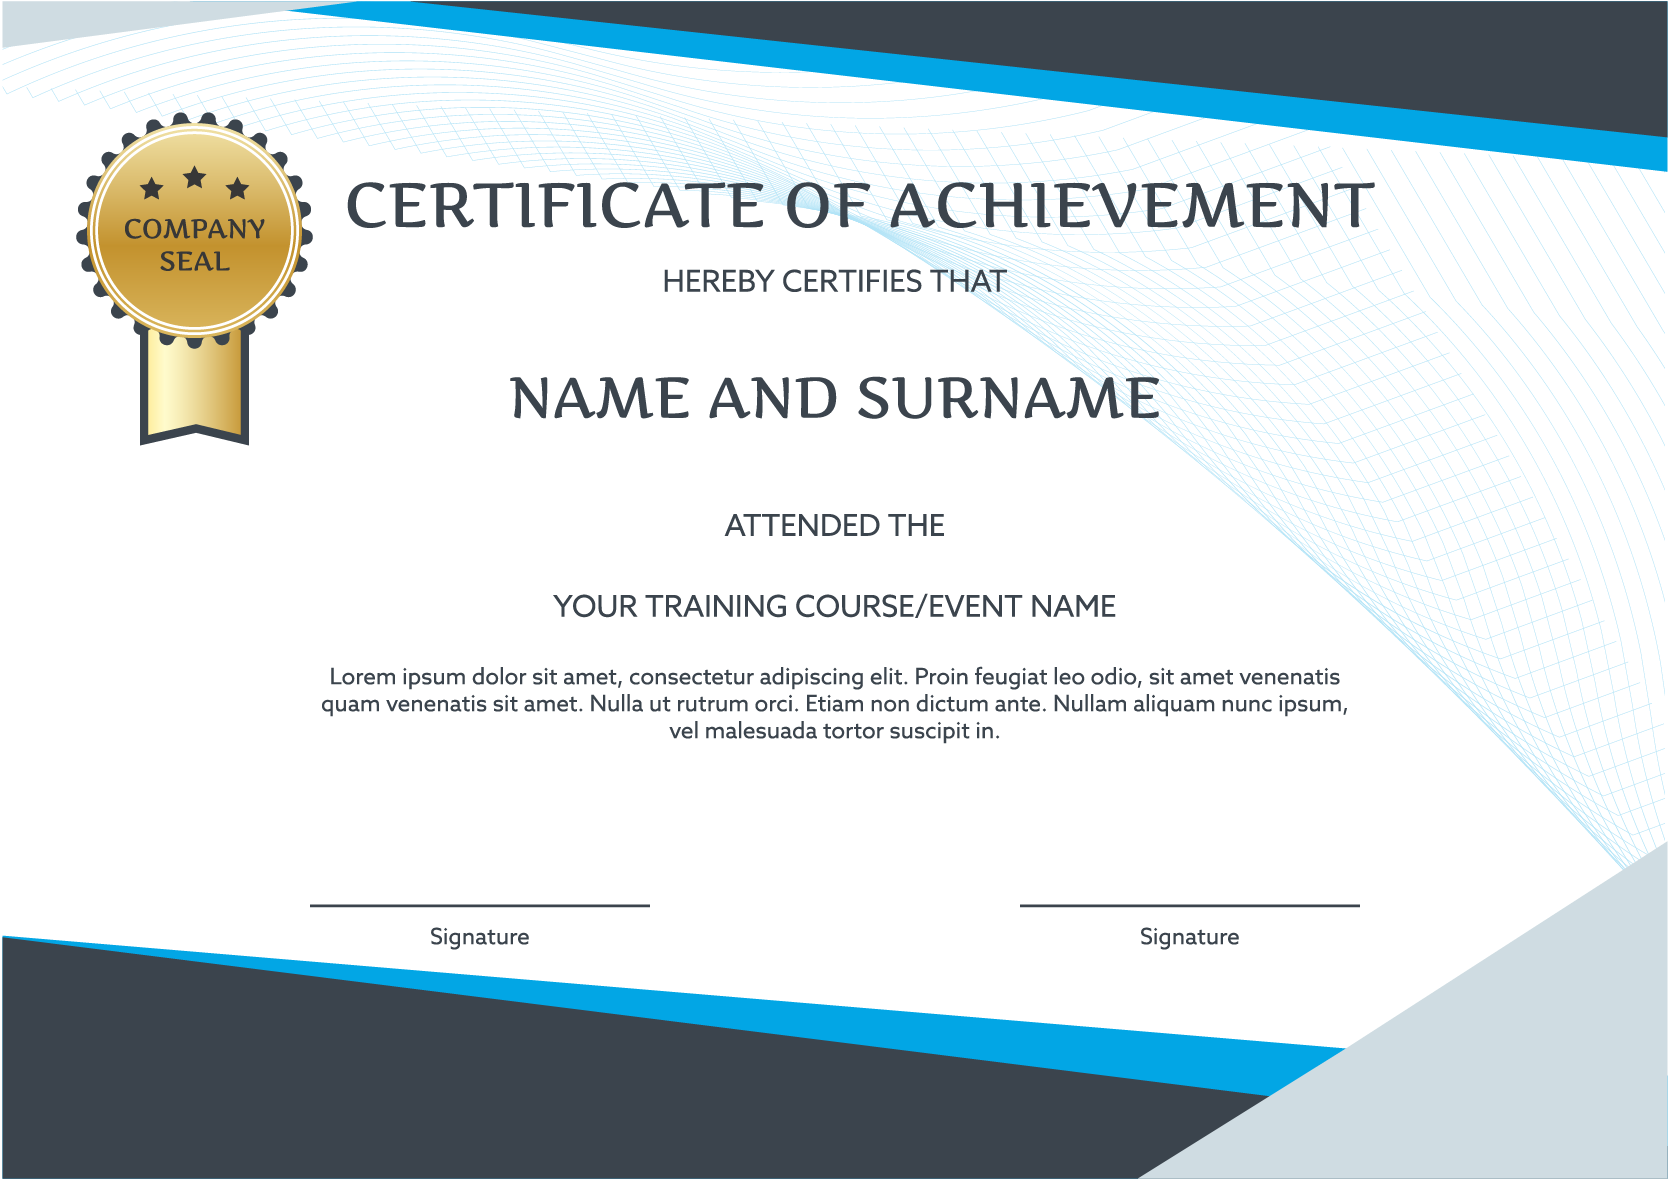 Certificate PNG Image HD